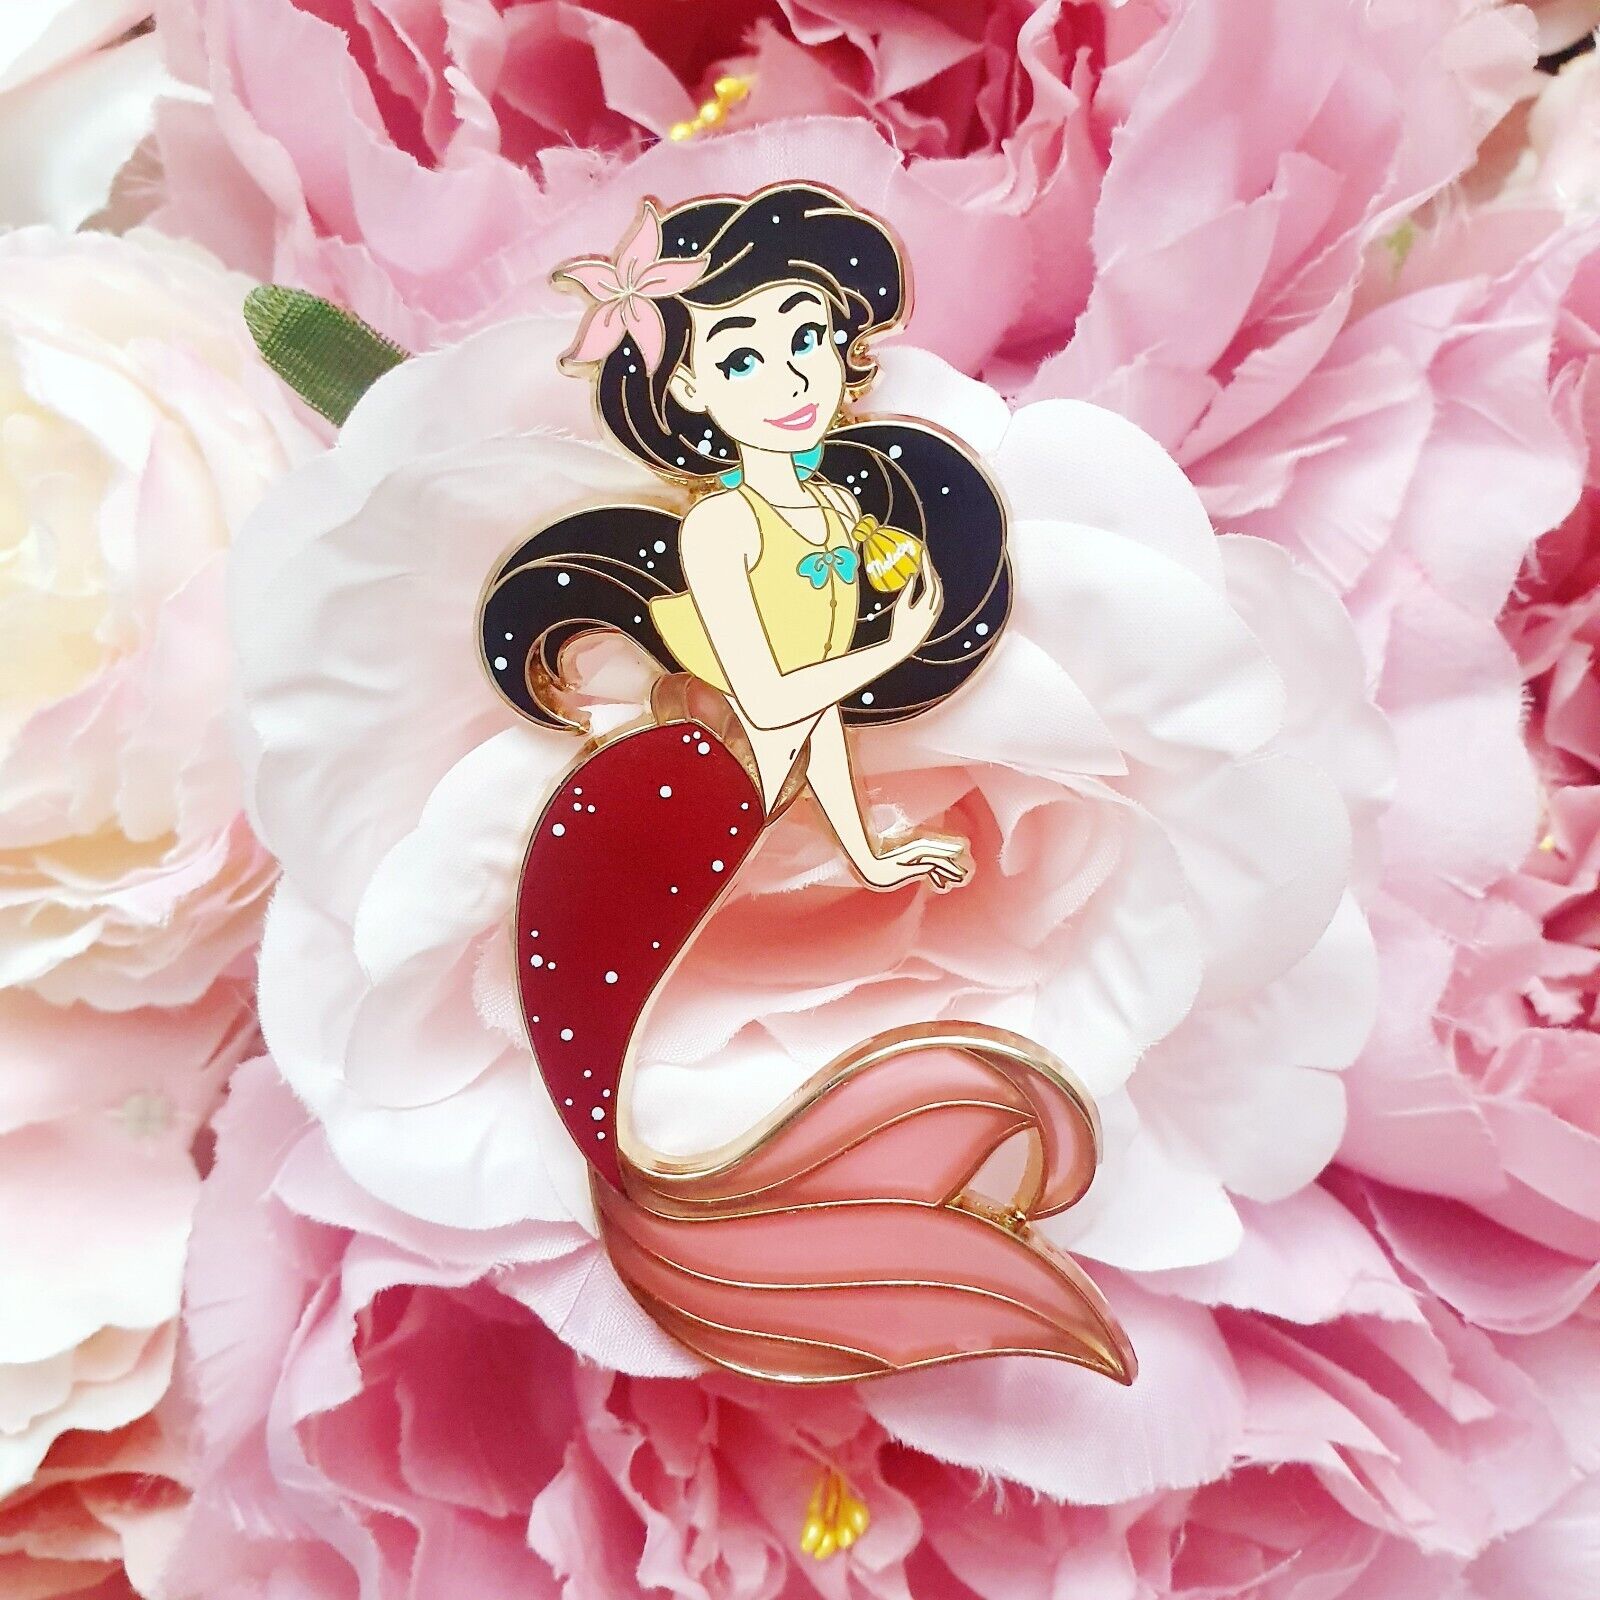 Disney Fantasy Pin Designer Mermaids Melody Ariel\'s Daughter The Little Mermaid